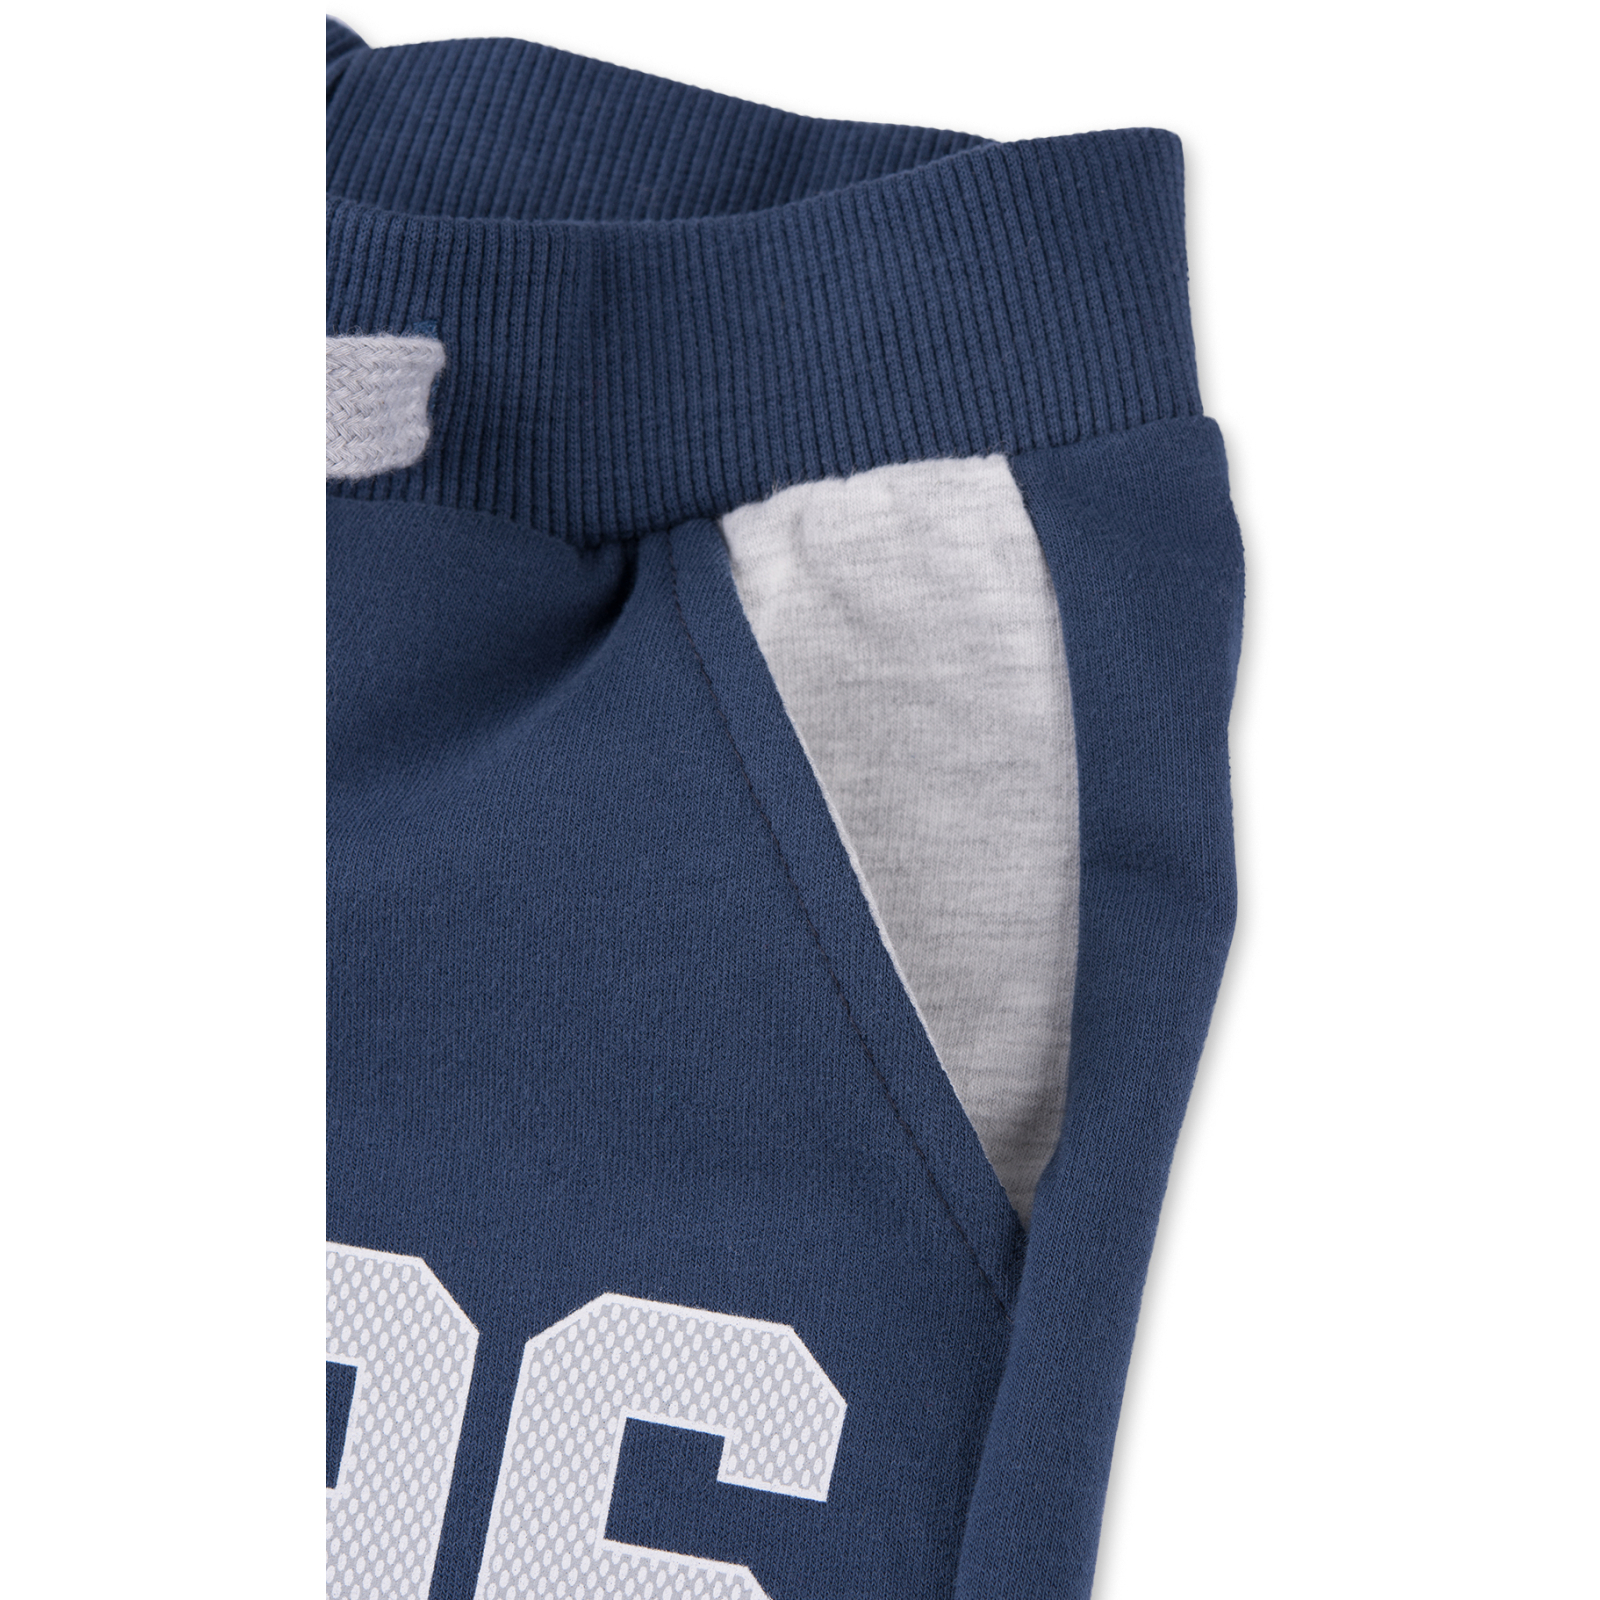 Спортивный костюм Breeze серый меланж индиго "New York" (7938-104B-gray-blue) изображение 6